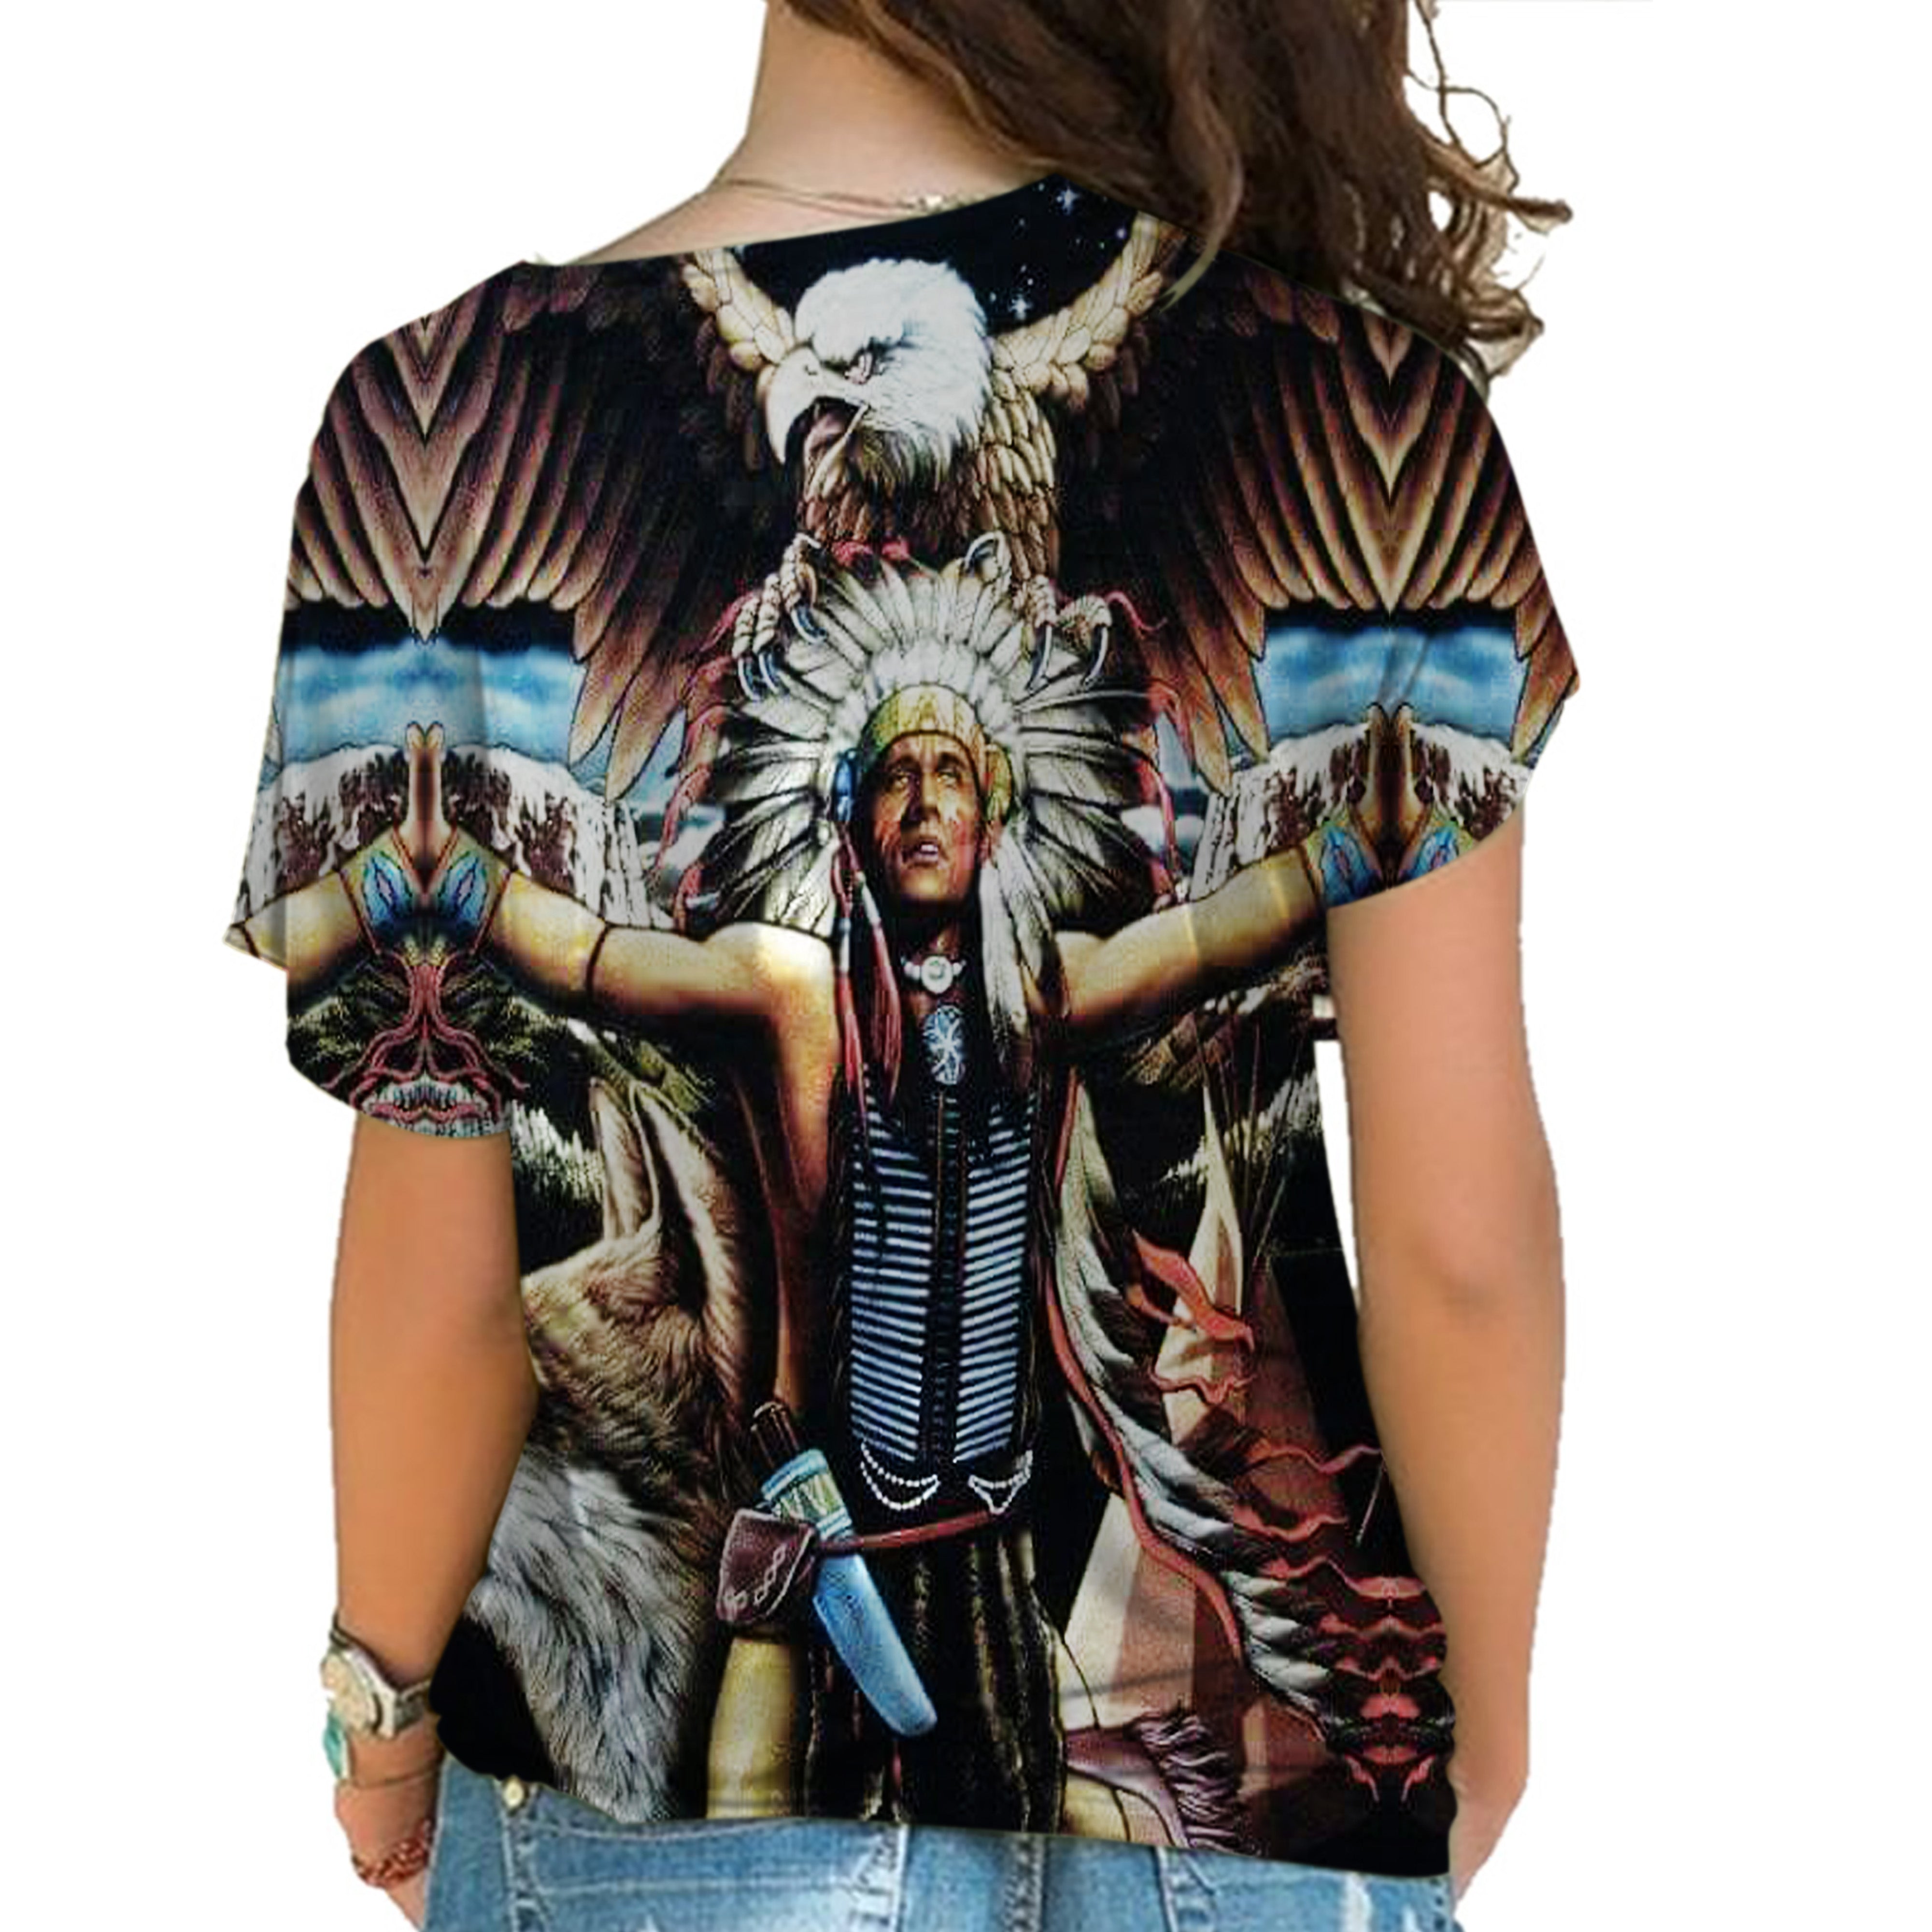 Native American Cross Shoulder Shirt 189 - Powwow Store